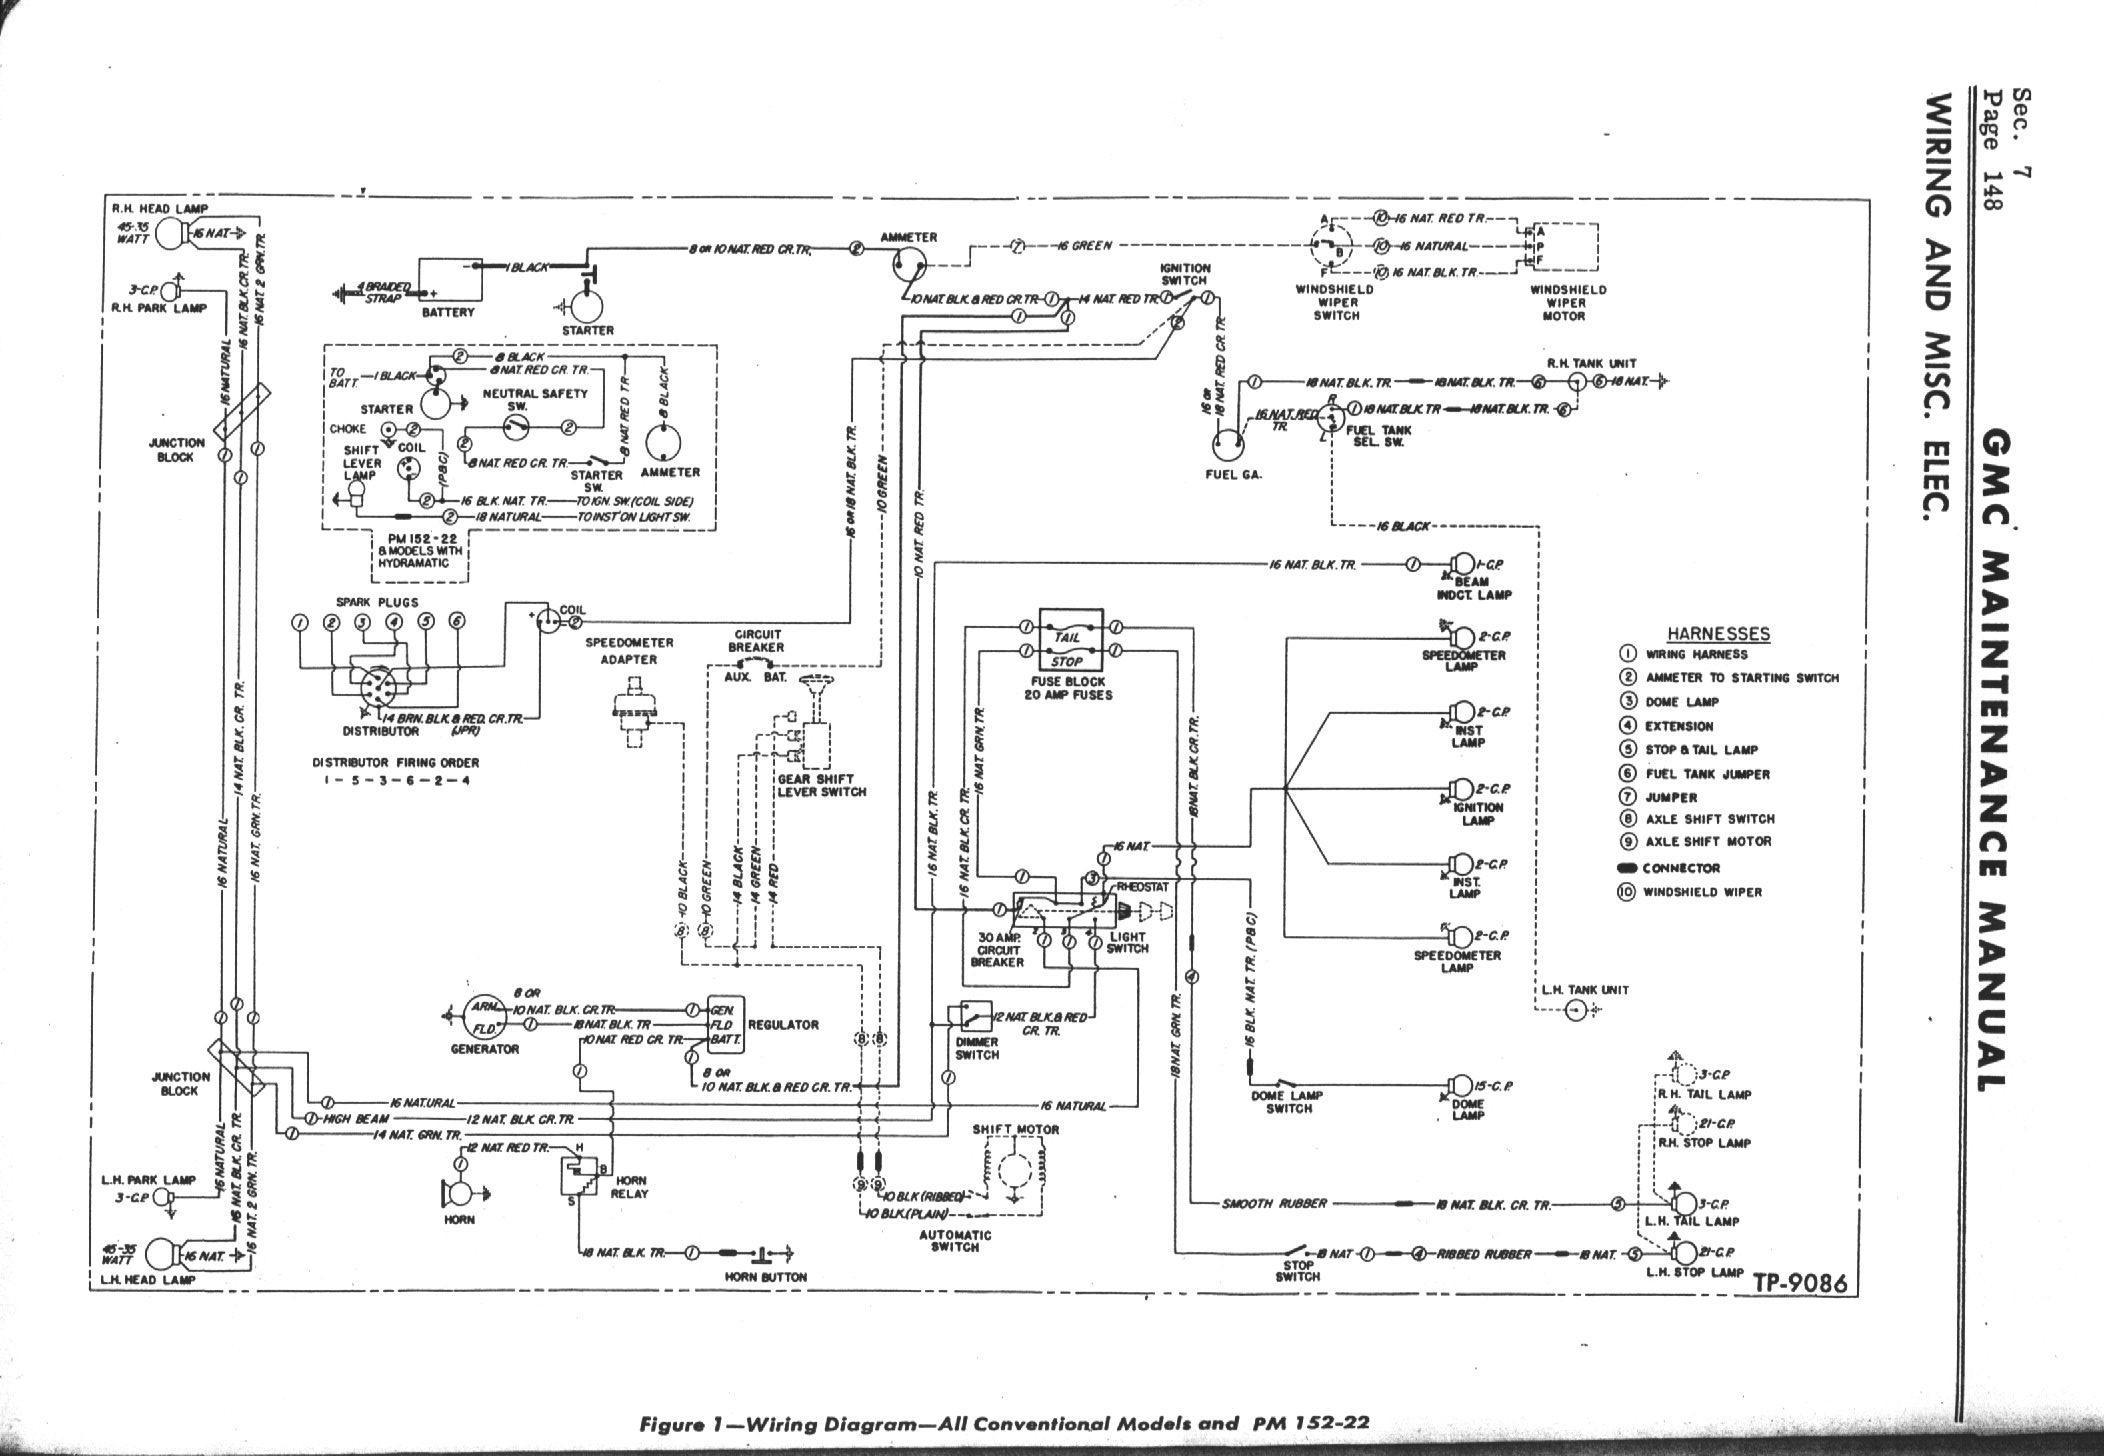 '52 GMC Eaton 2 Speed wiring Diagram??? - The Stovebolt Forums dodge spirit factory radio wiring diagram 